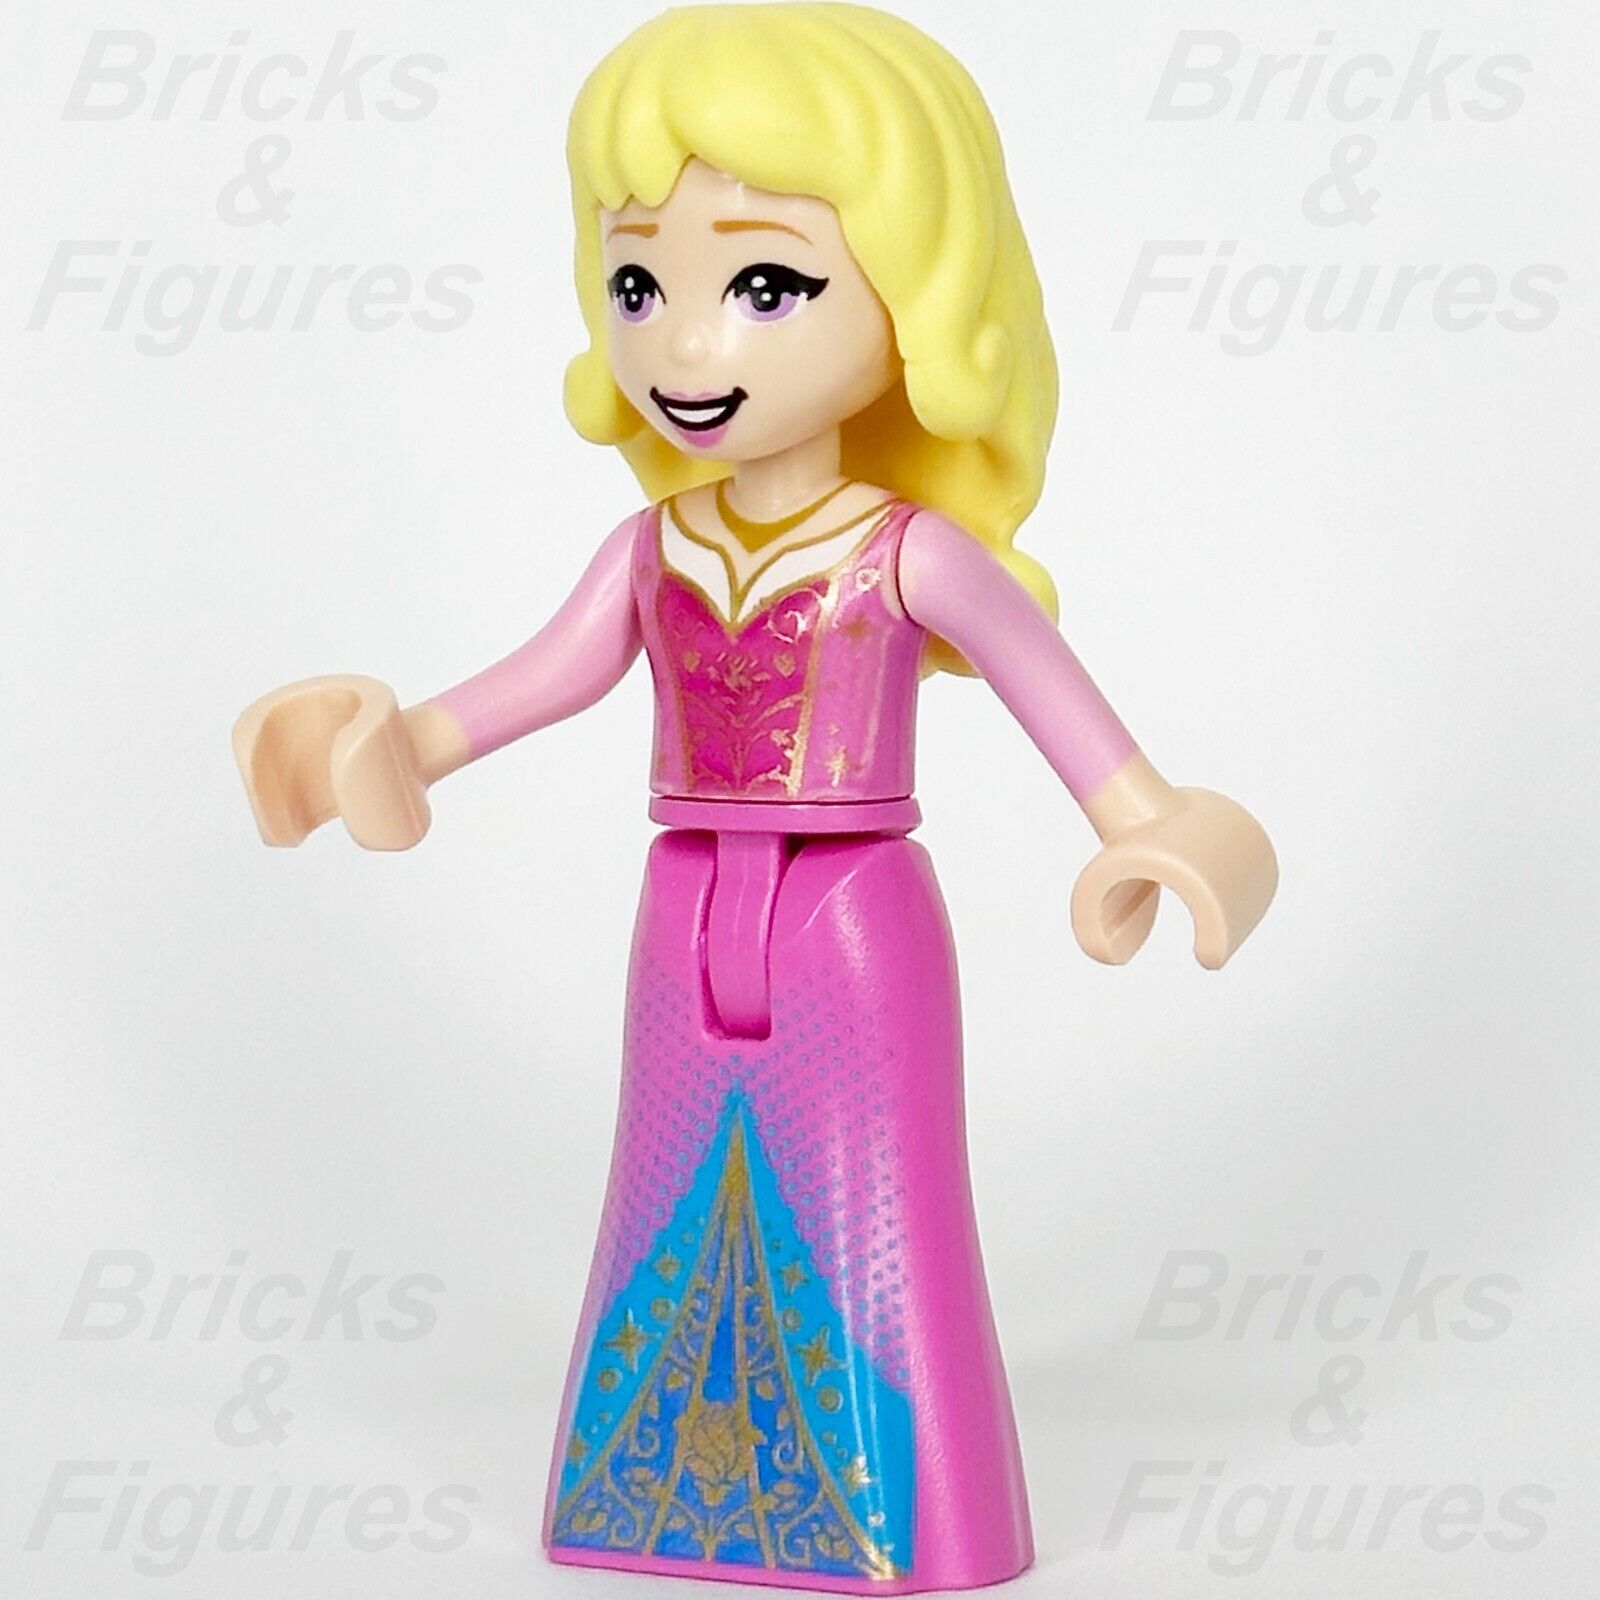 LEGO Disney Princess Aurora Minifigure Sleeping Beauty 43188 dp105 Minifig 1